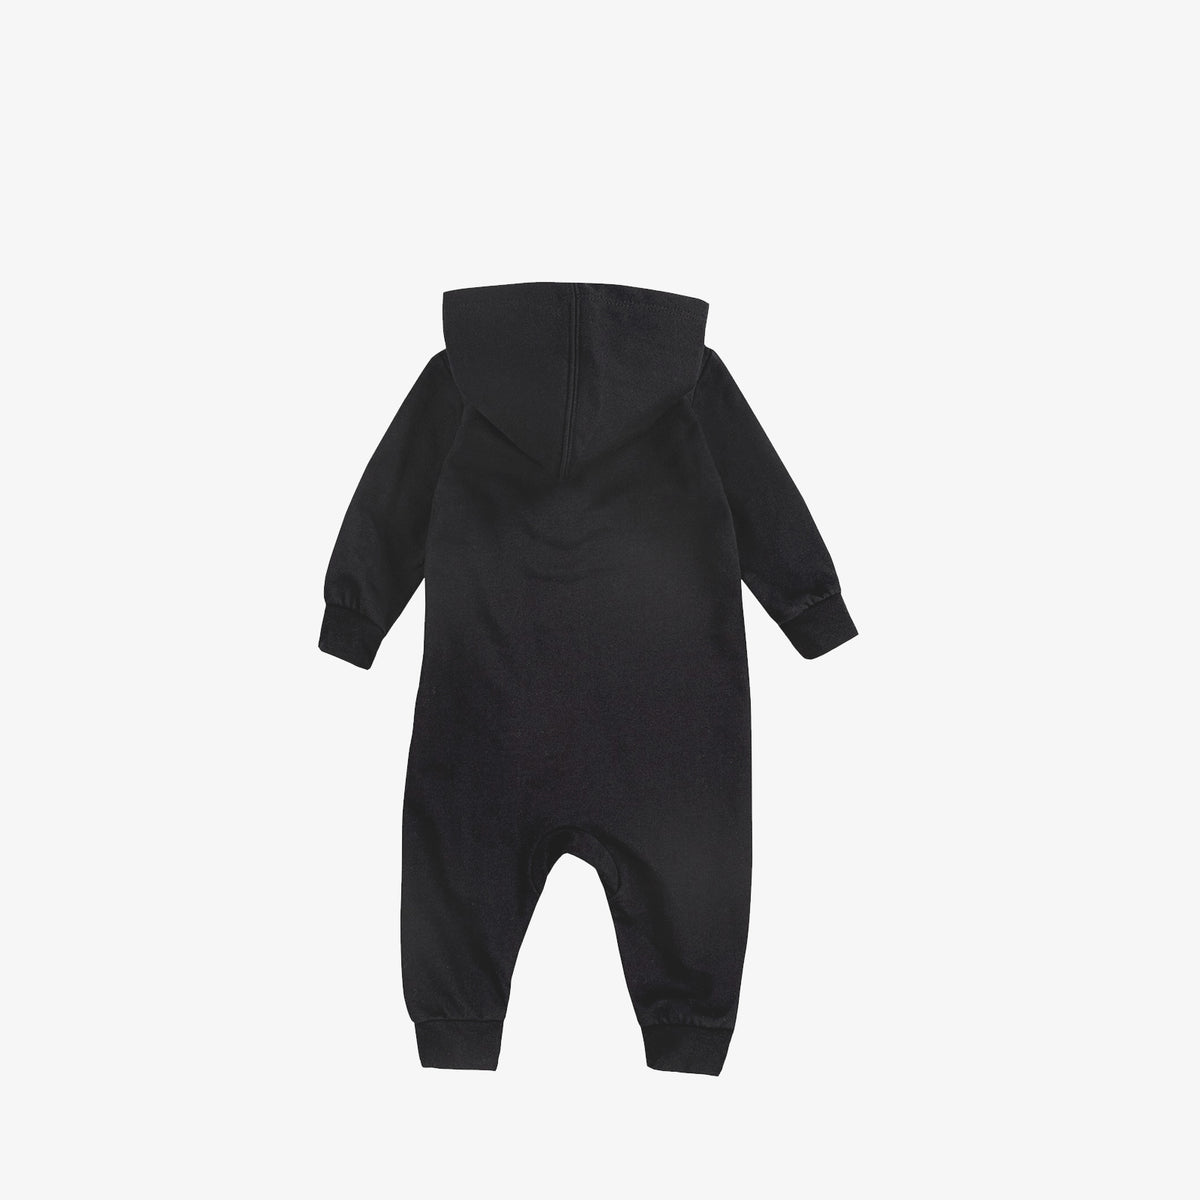 Jordan Jumpman Hooded Infant Coveralls - Black